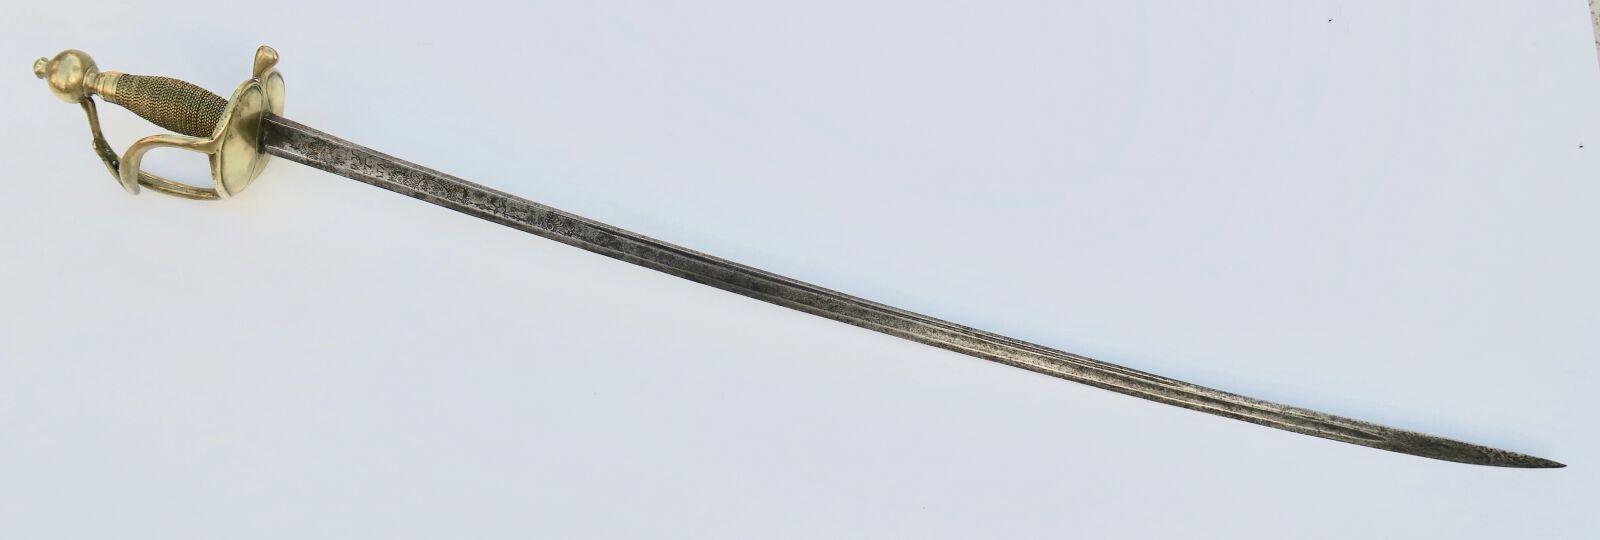 Null Dragon sword model 1750. Brass handle, double plate, round pommel, brass fi&hellip;